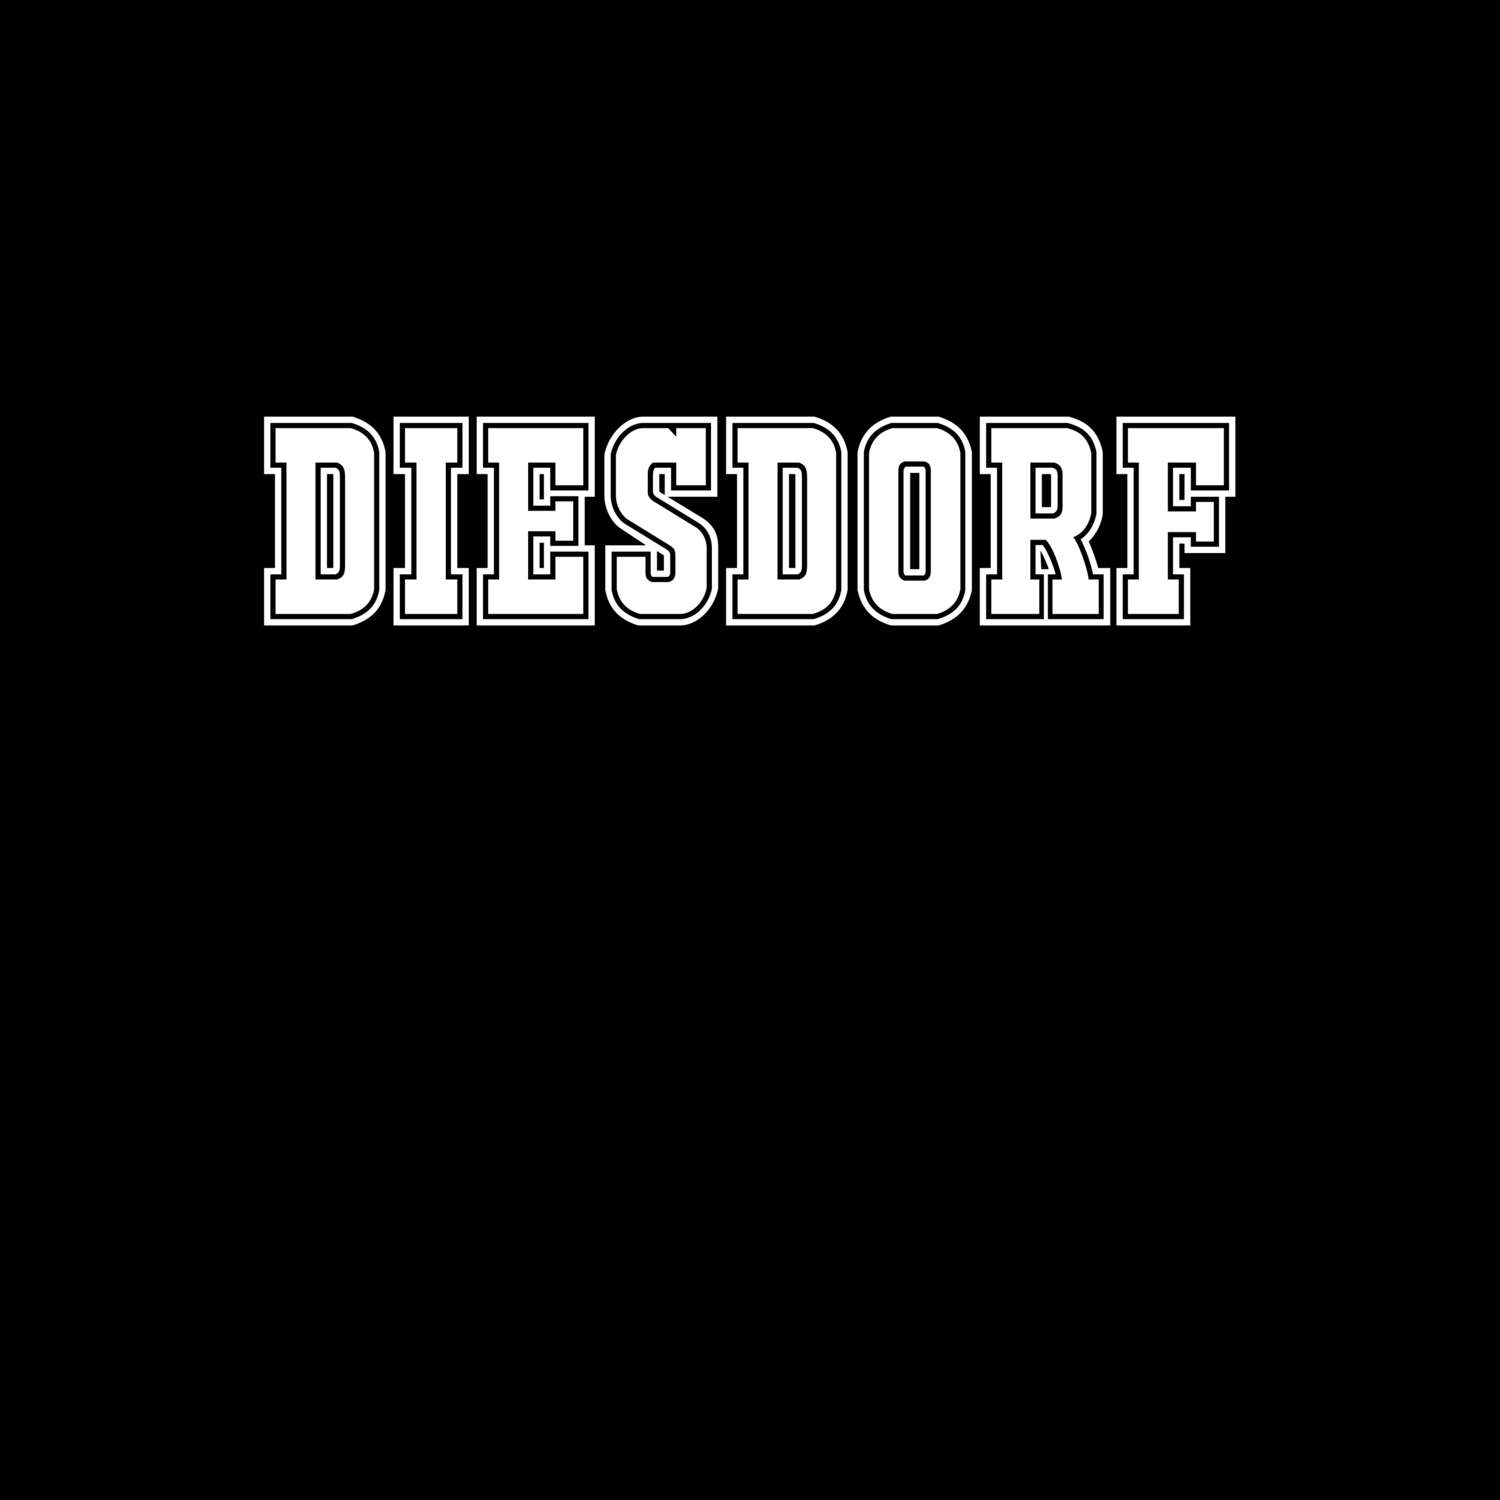 Diesdorf T-Shirt »Classic«